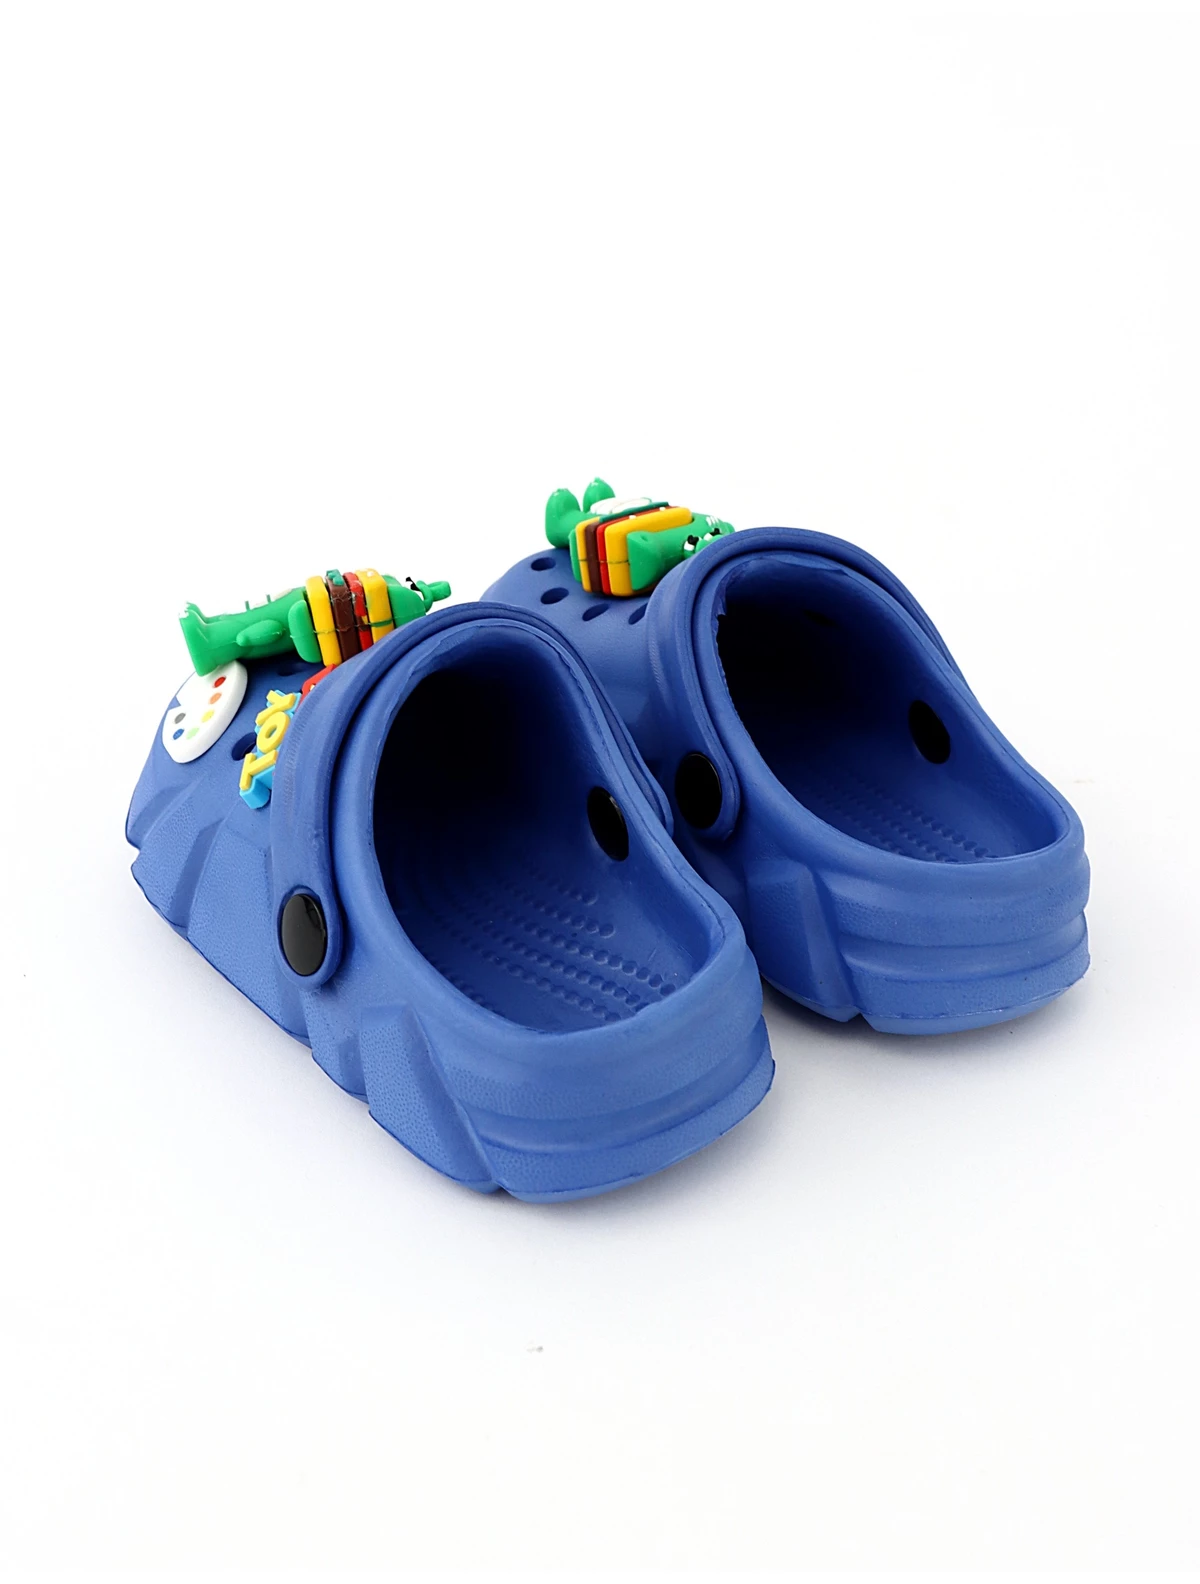 Papuci de spuma si Jibbtz Toy Story albastru